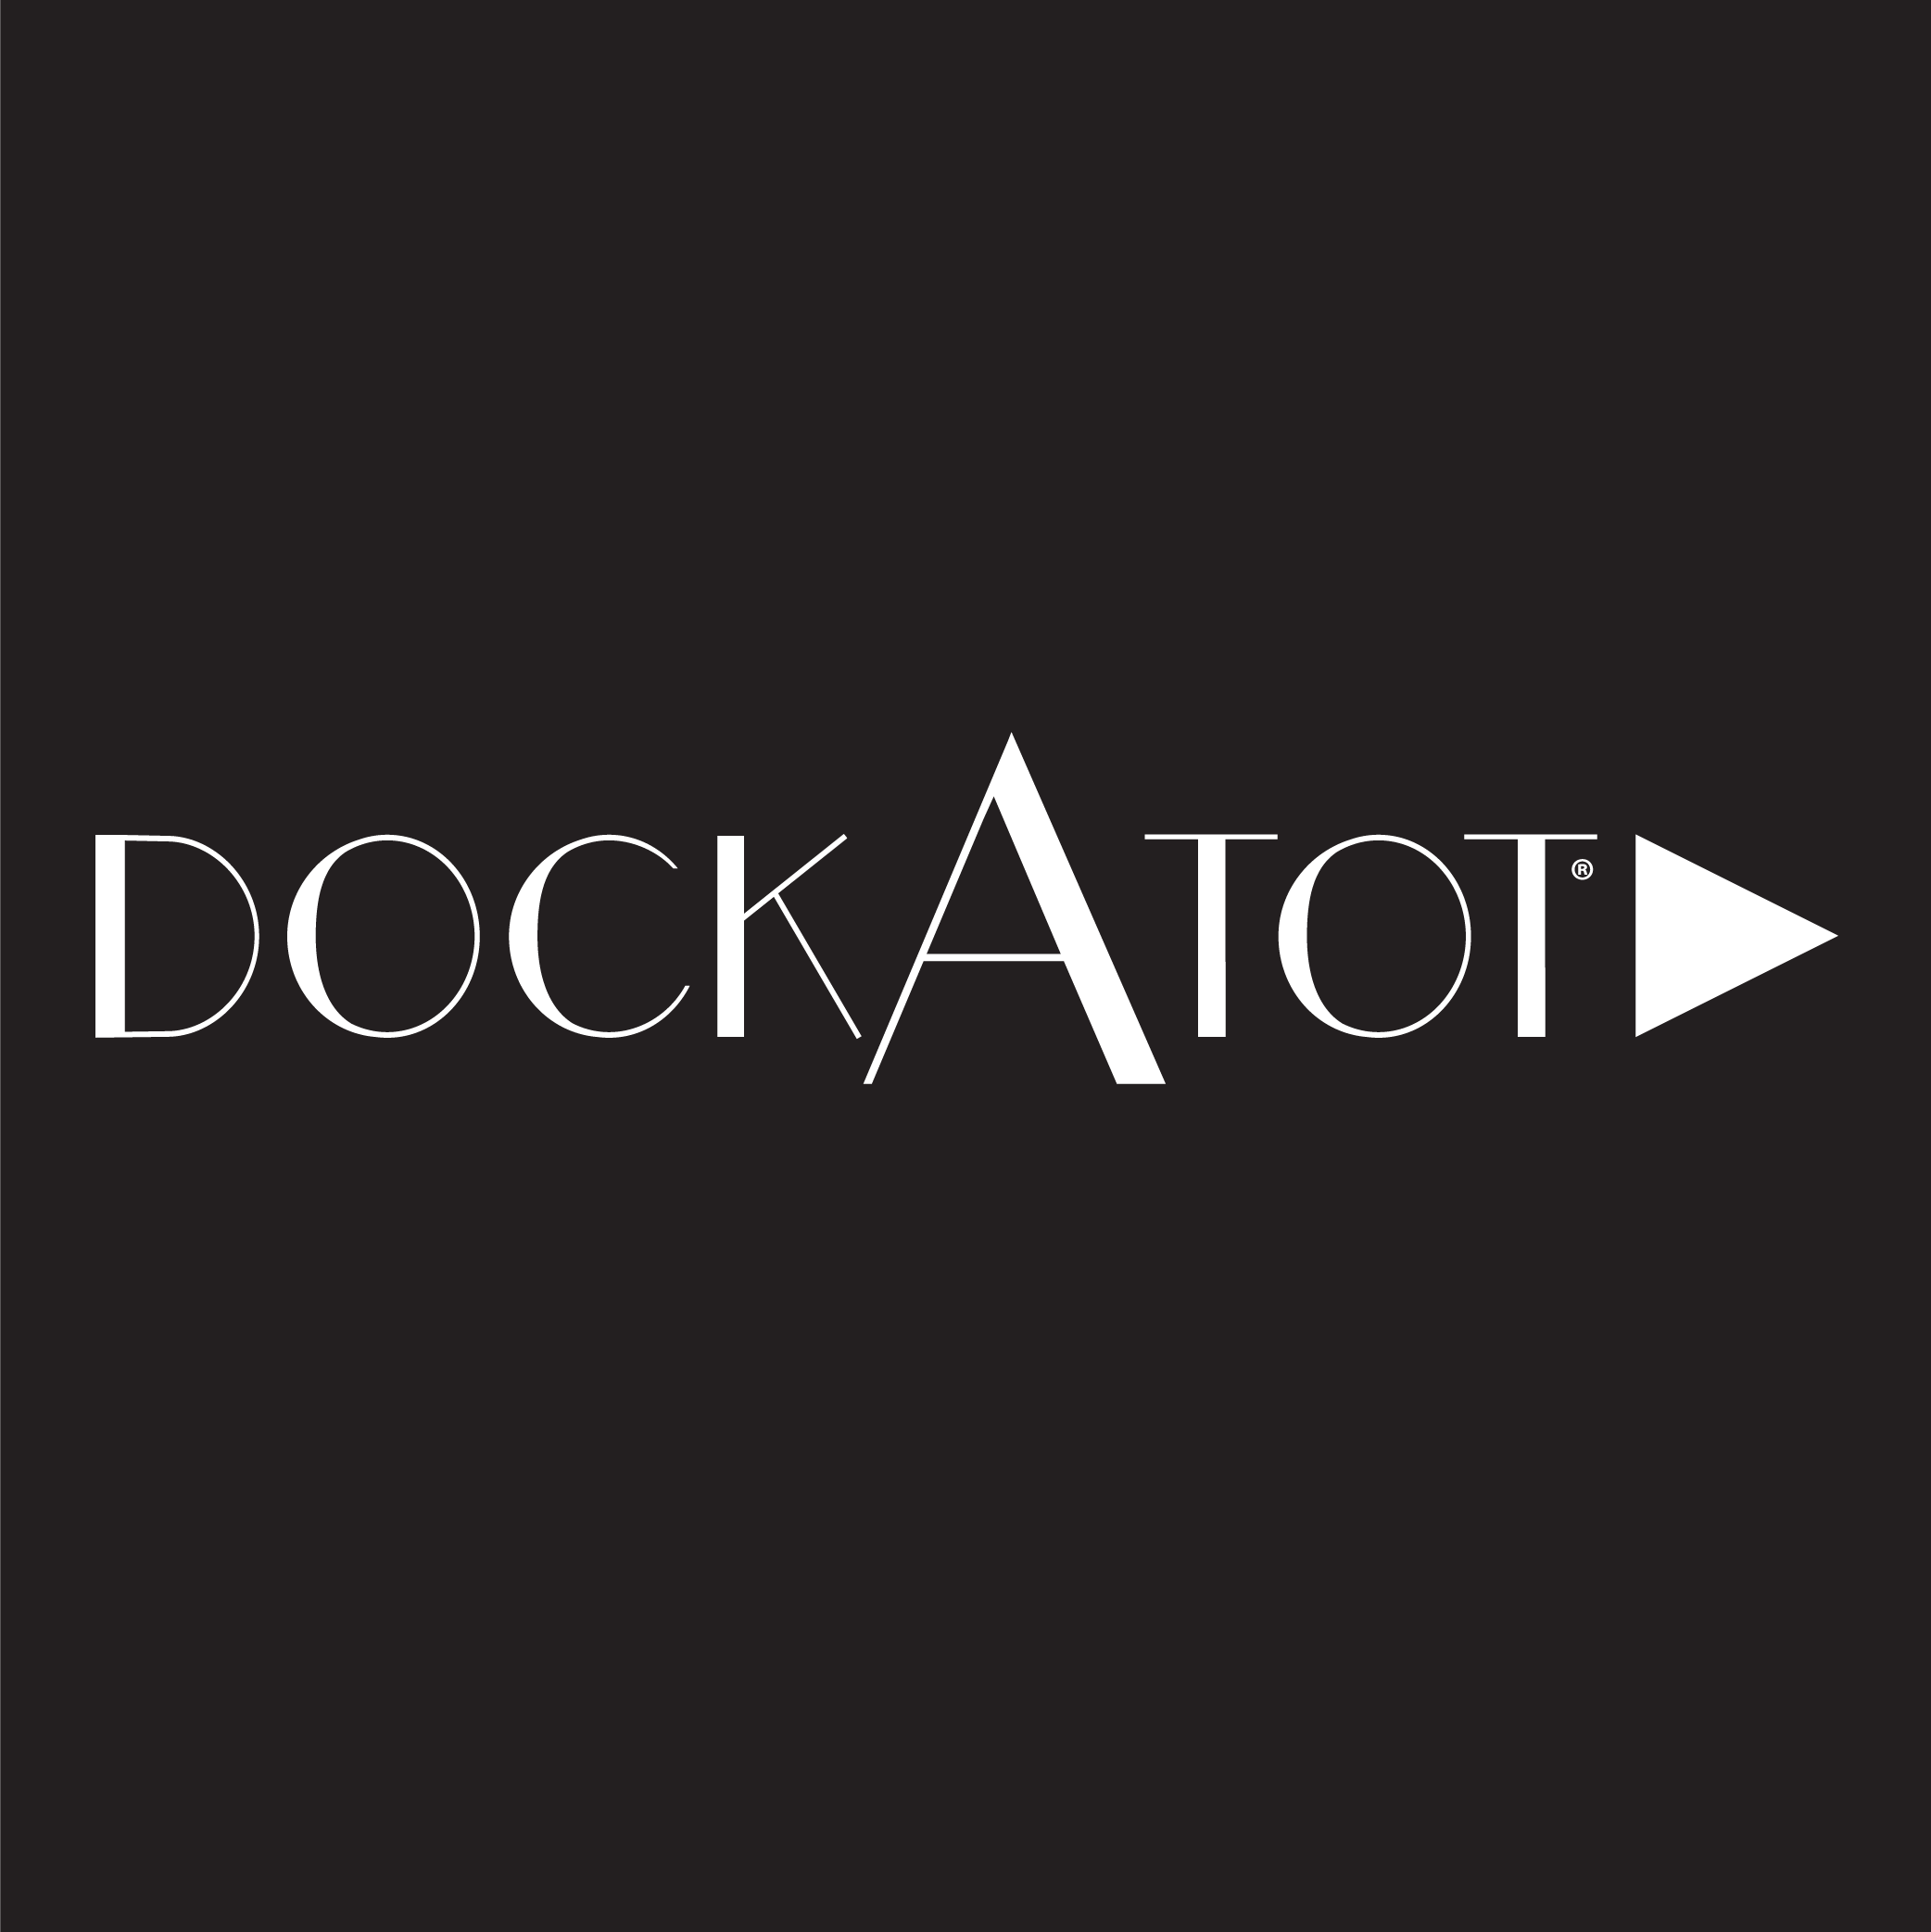 Dock A Tot logo